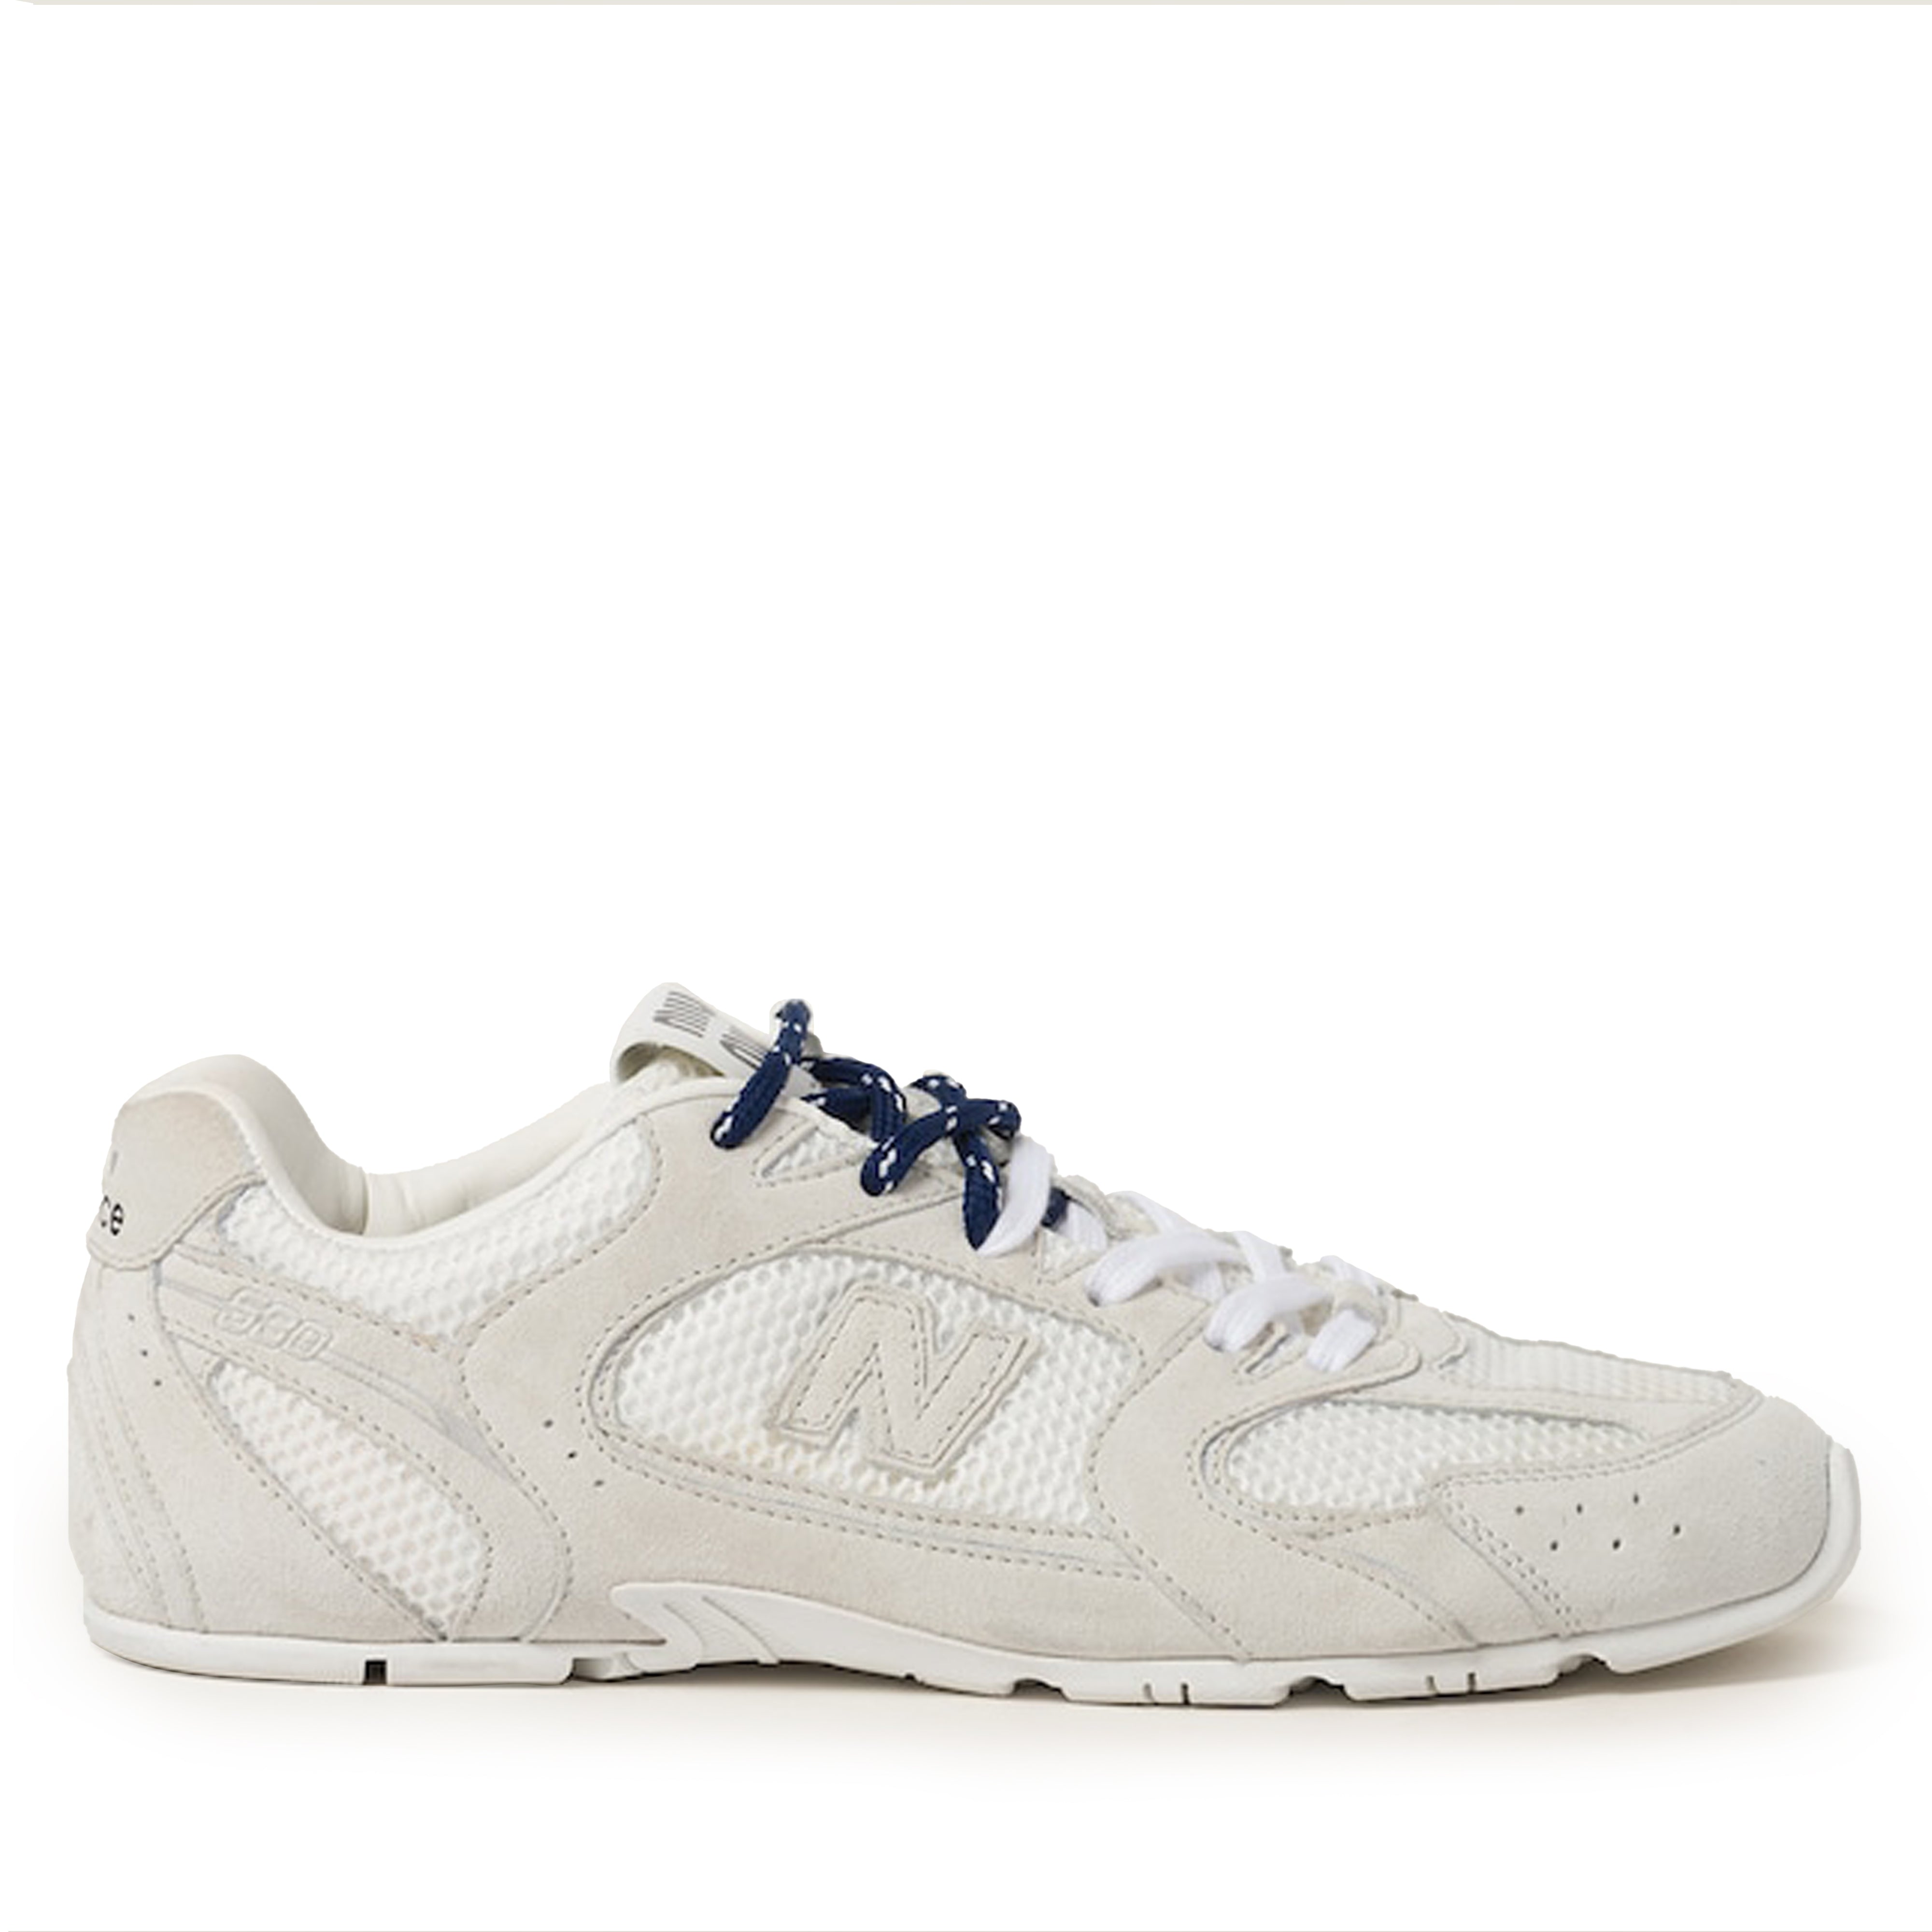 Miu Miu - New Balance 530 SL Suede Mesh Sneakers - (White) – DSMNY 